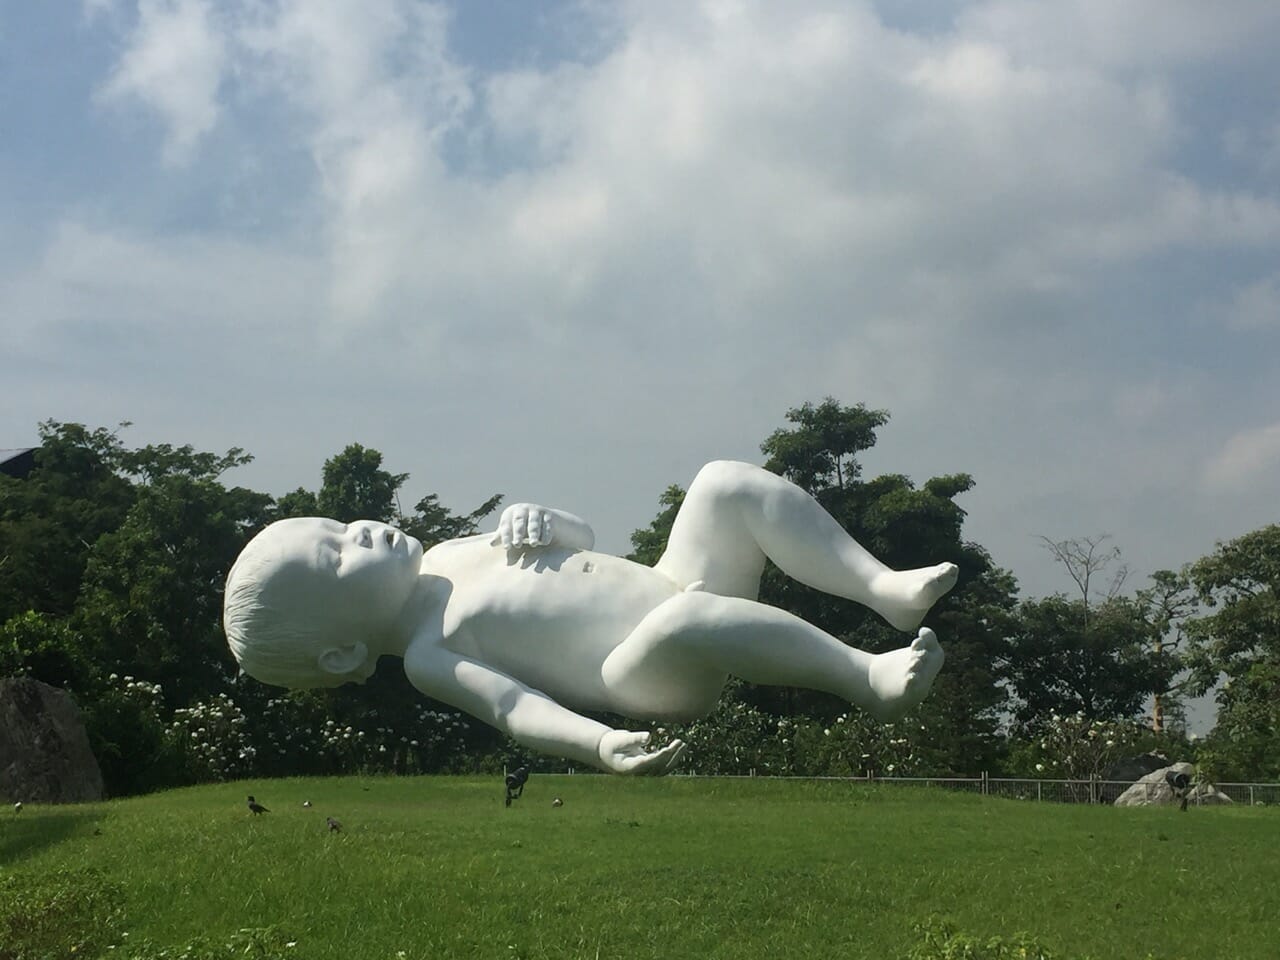 a massive white baby sculpture in Singapore